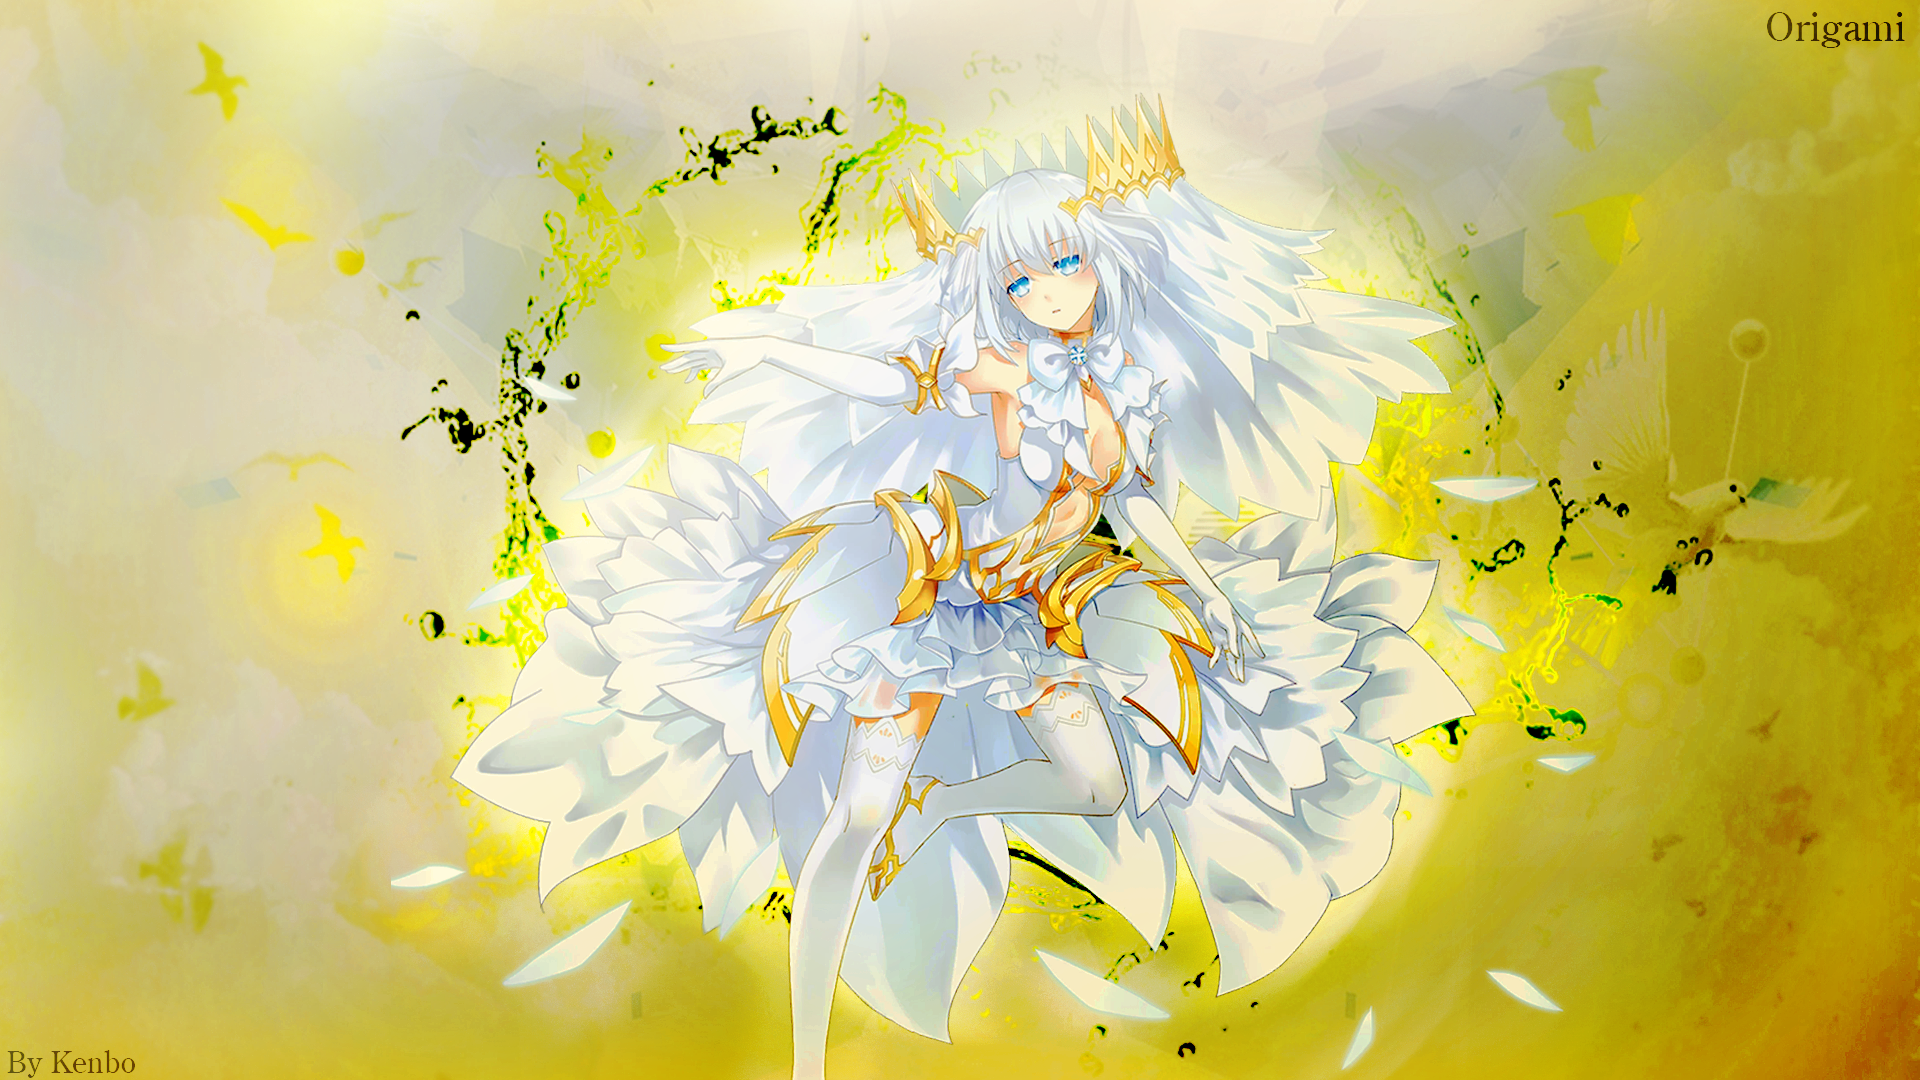 Anime 1920x1080 Date A Live white hair anime anime girls yellow Tobiichi Origami wedding dress